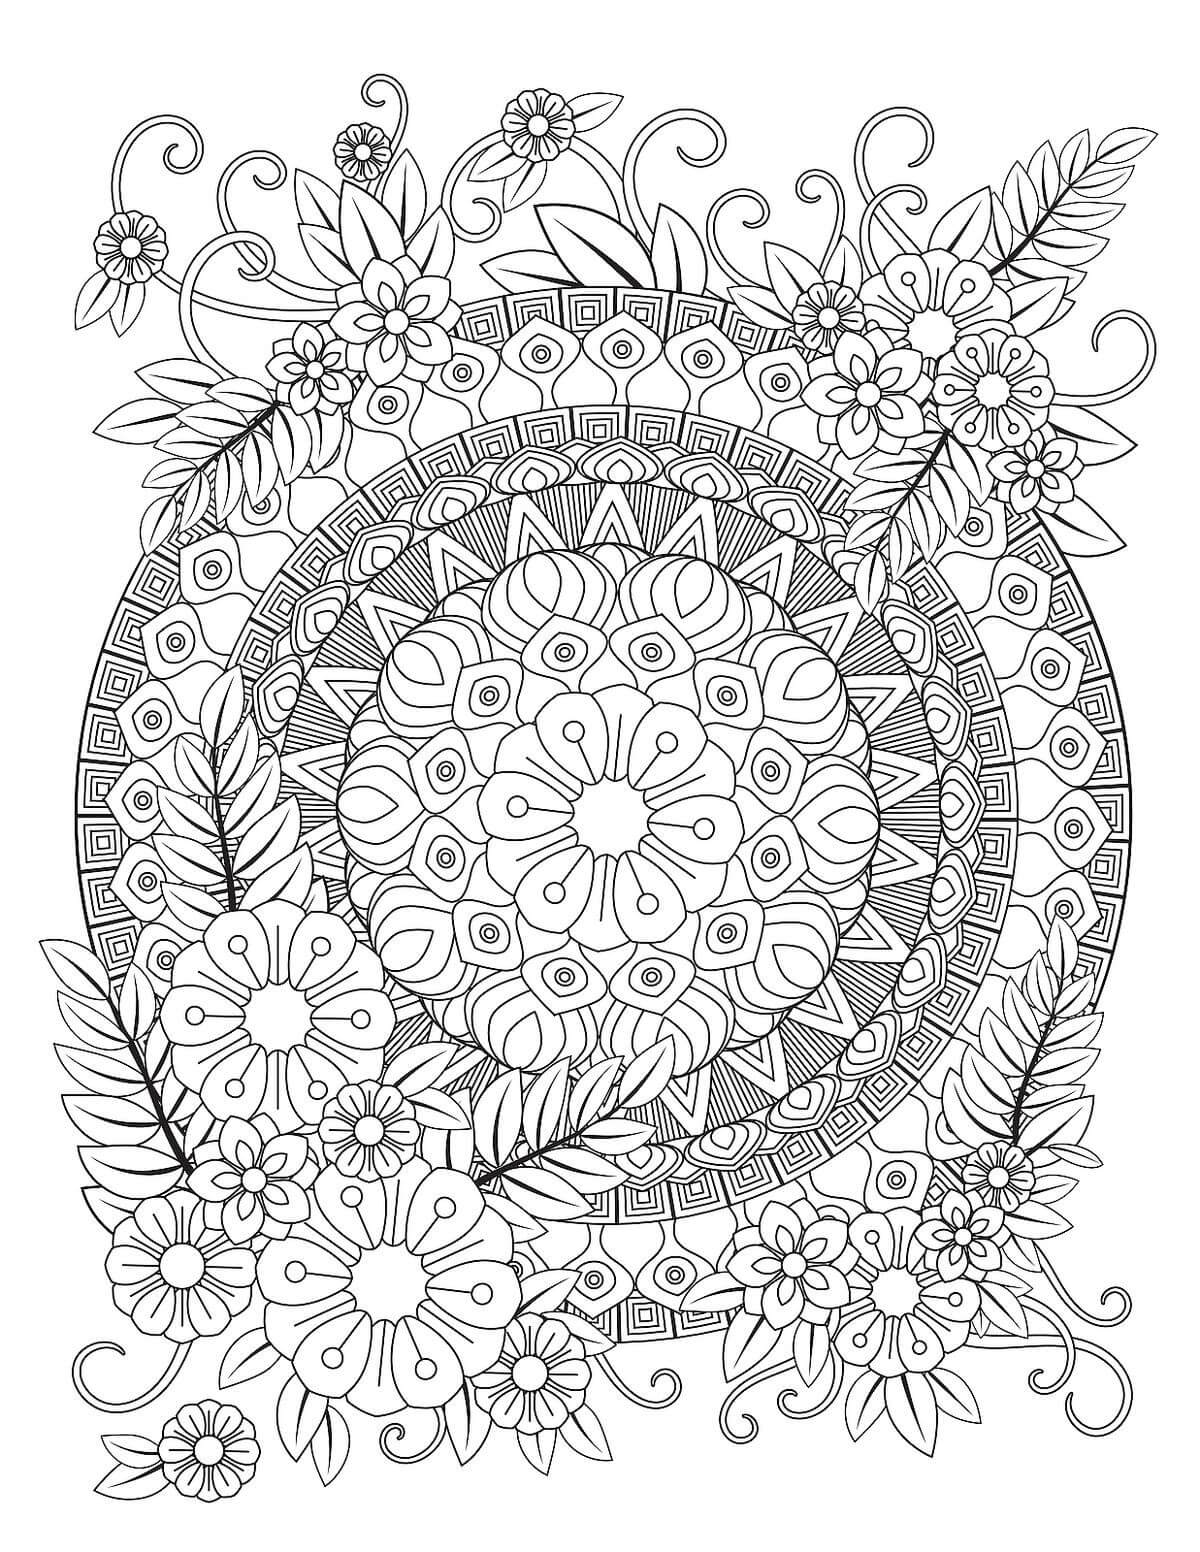 Mandala Winter Coloring Page - Sheet 9 Mandalas